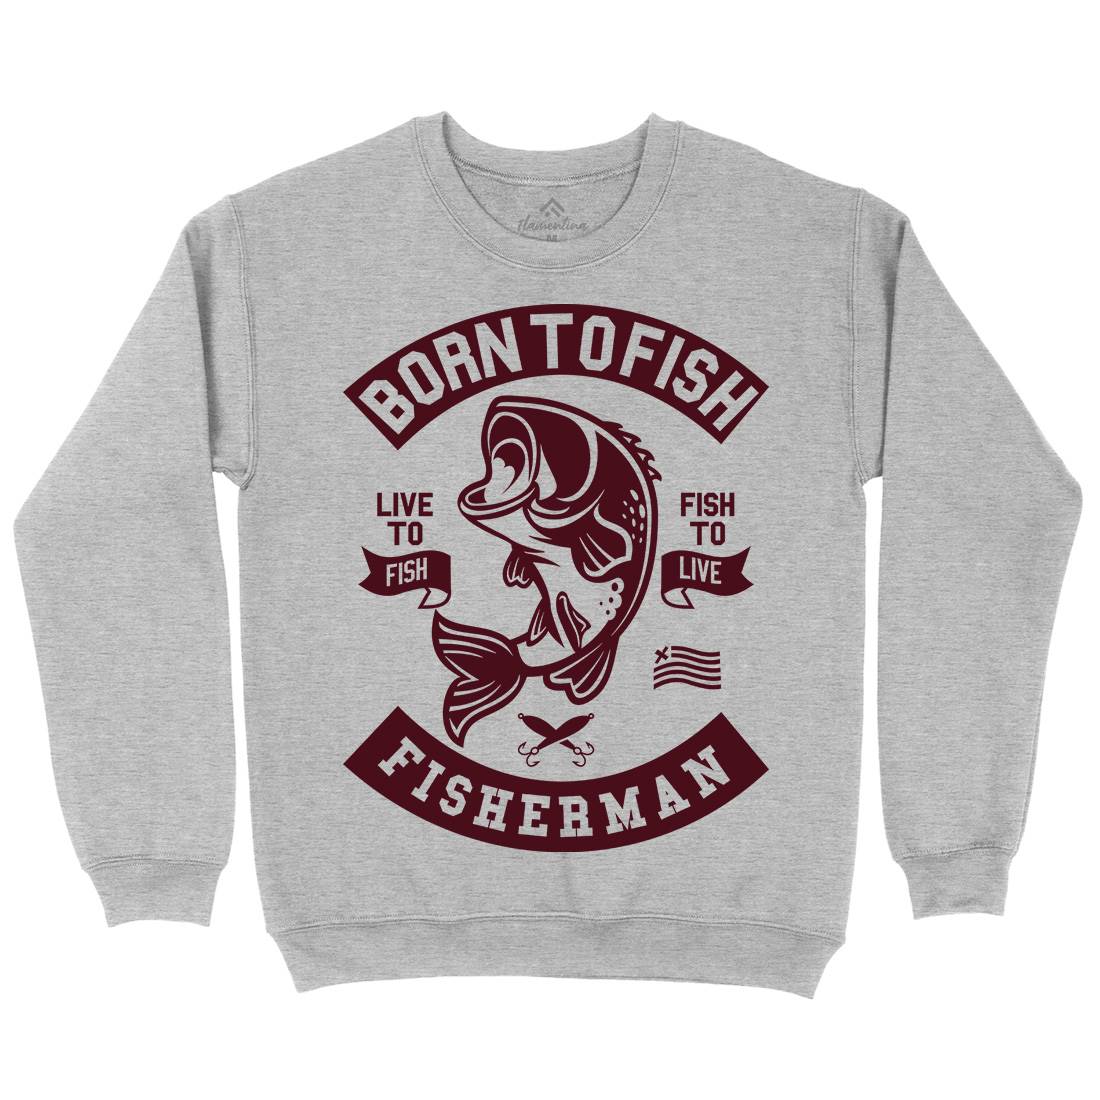 Born To Fish Kids Crew Neck Sweatshirt Fishing A208